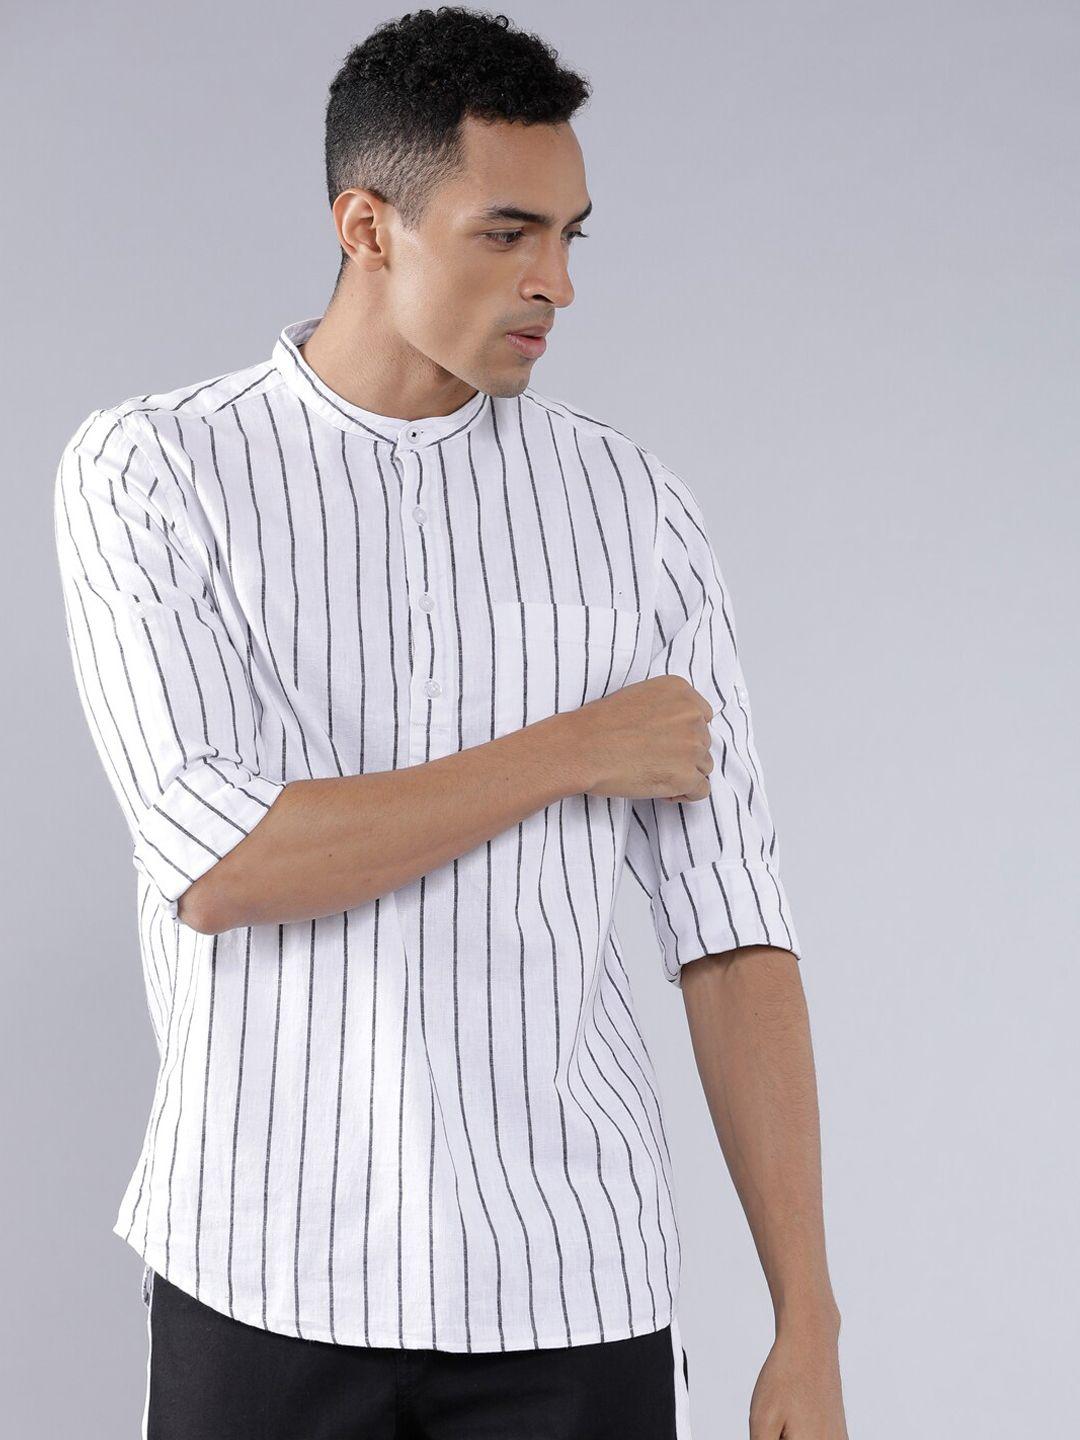 highlander-men-white-&-black-slim-fit-striped-casual-shirt